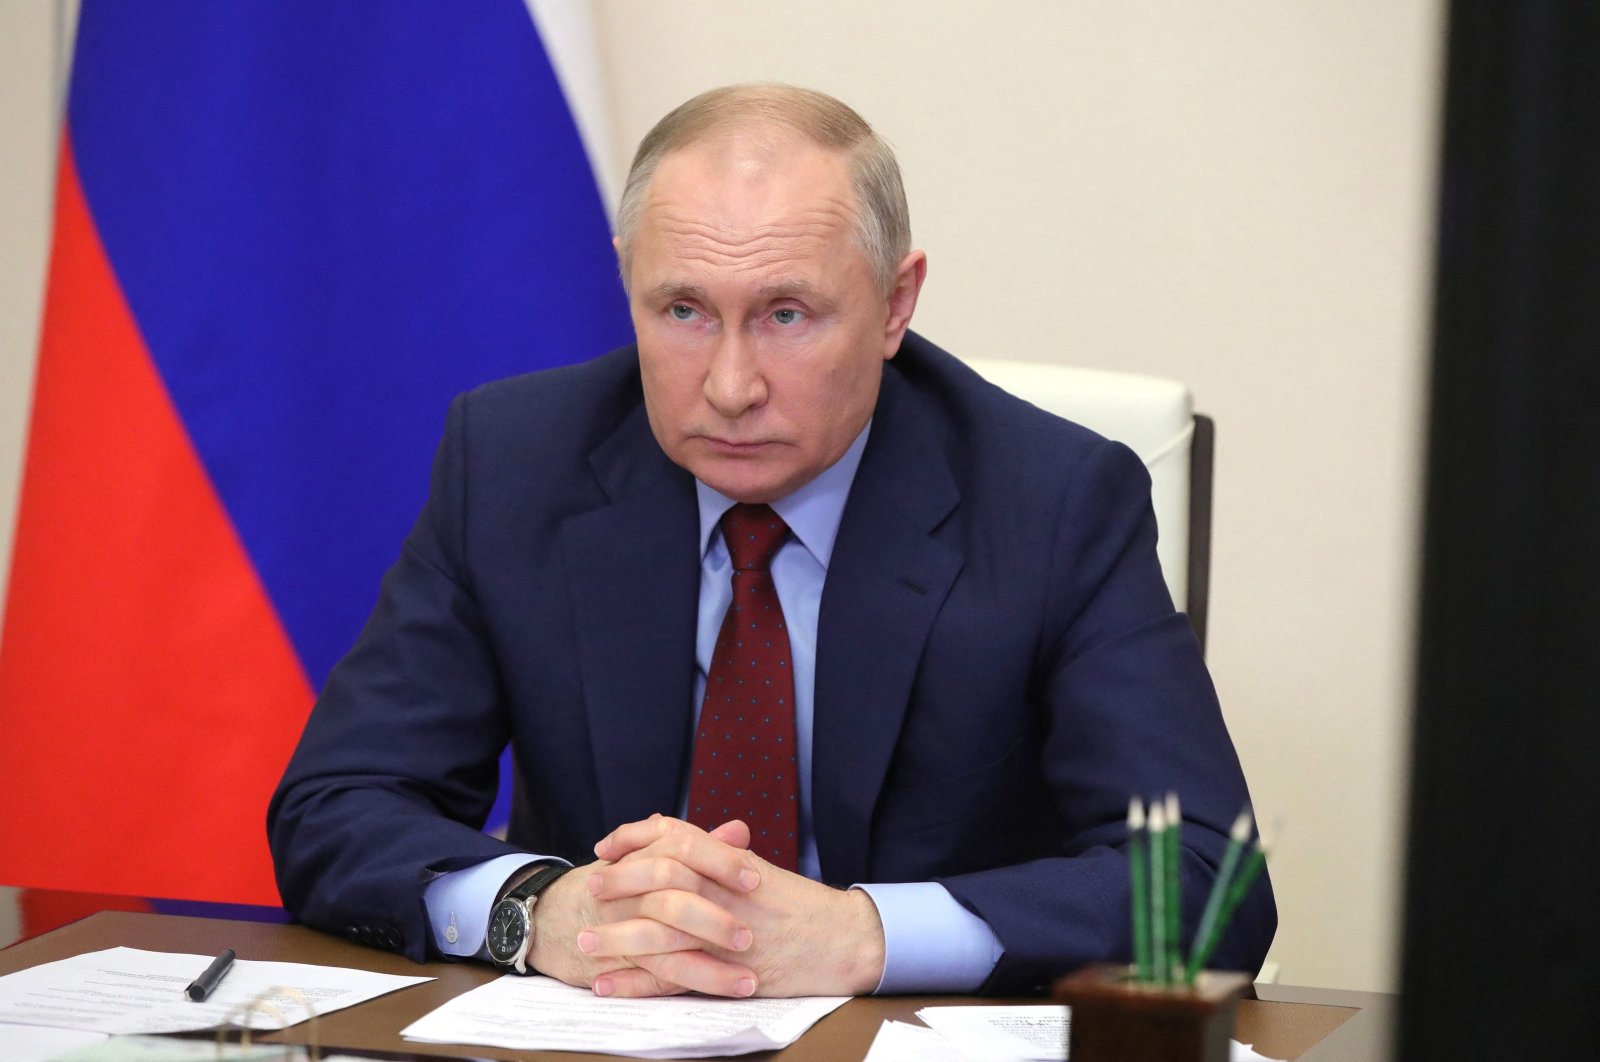 Rusia akan ‘memantau’ ekspor makanan ke negara-negara ‘bermusuhan’: Putin